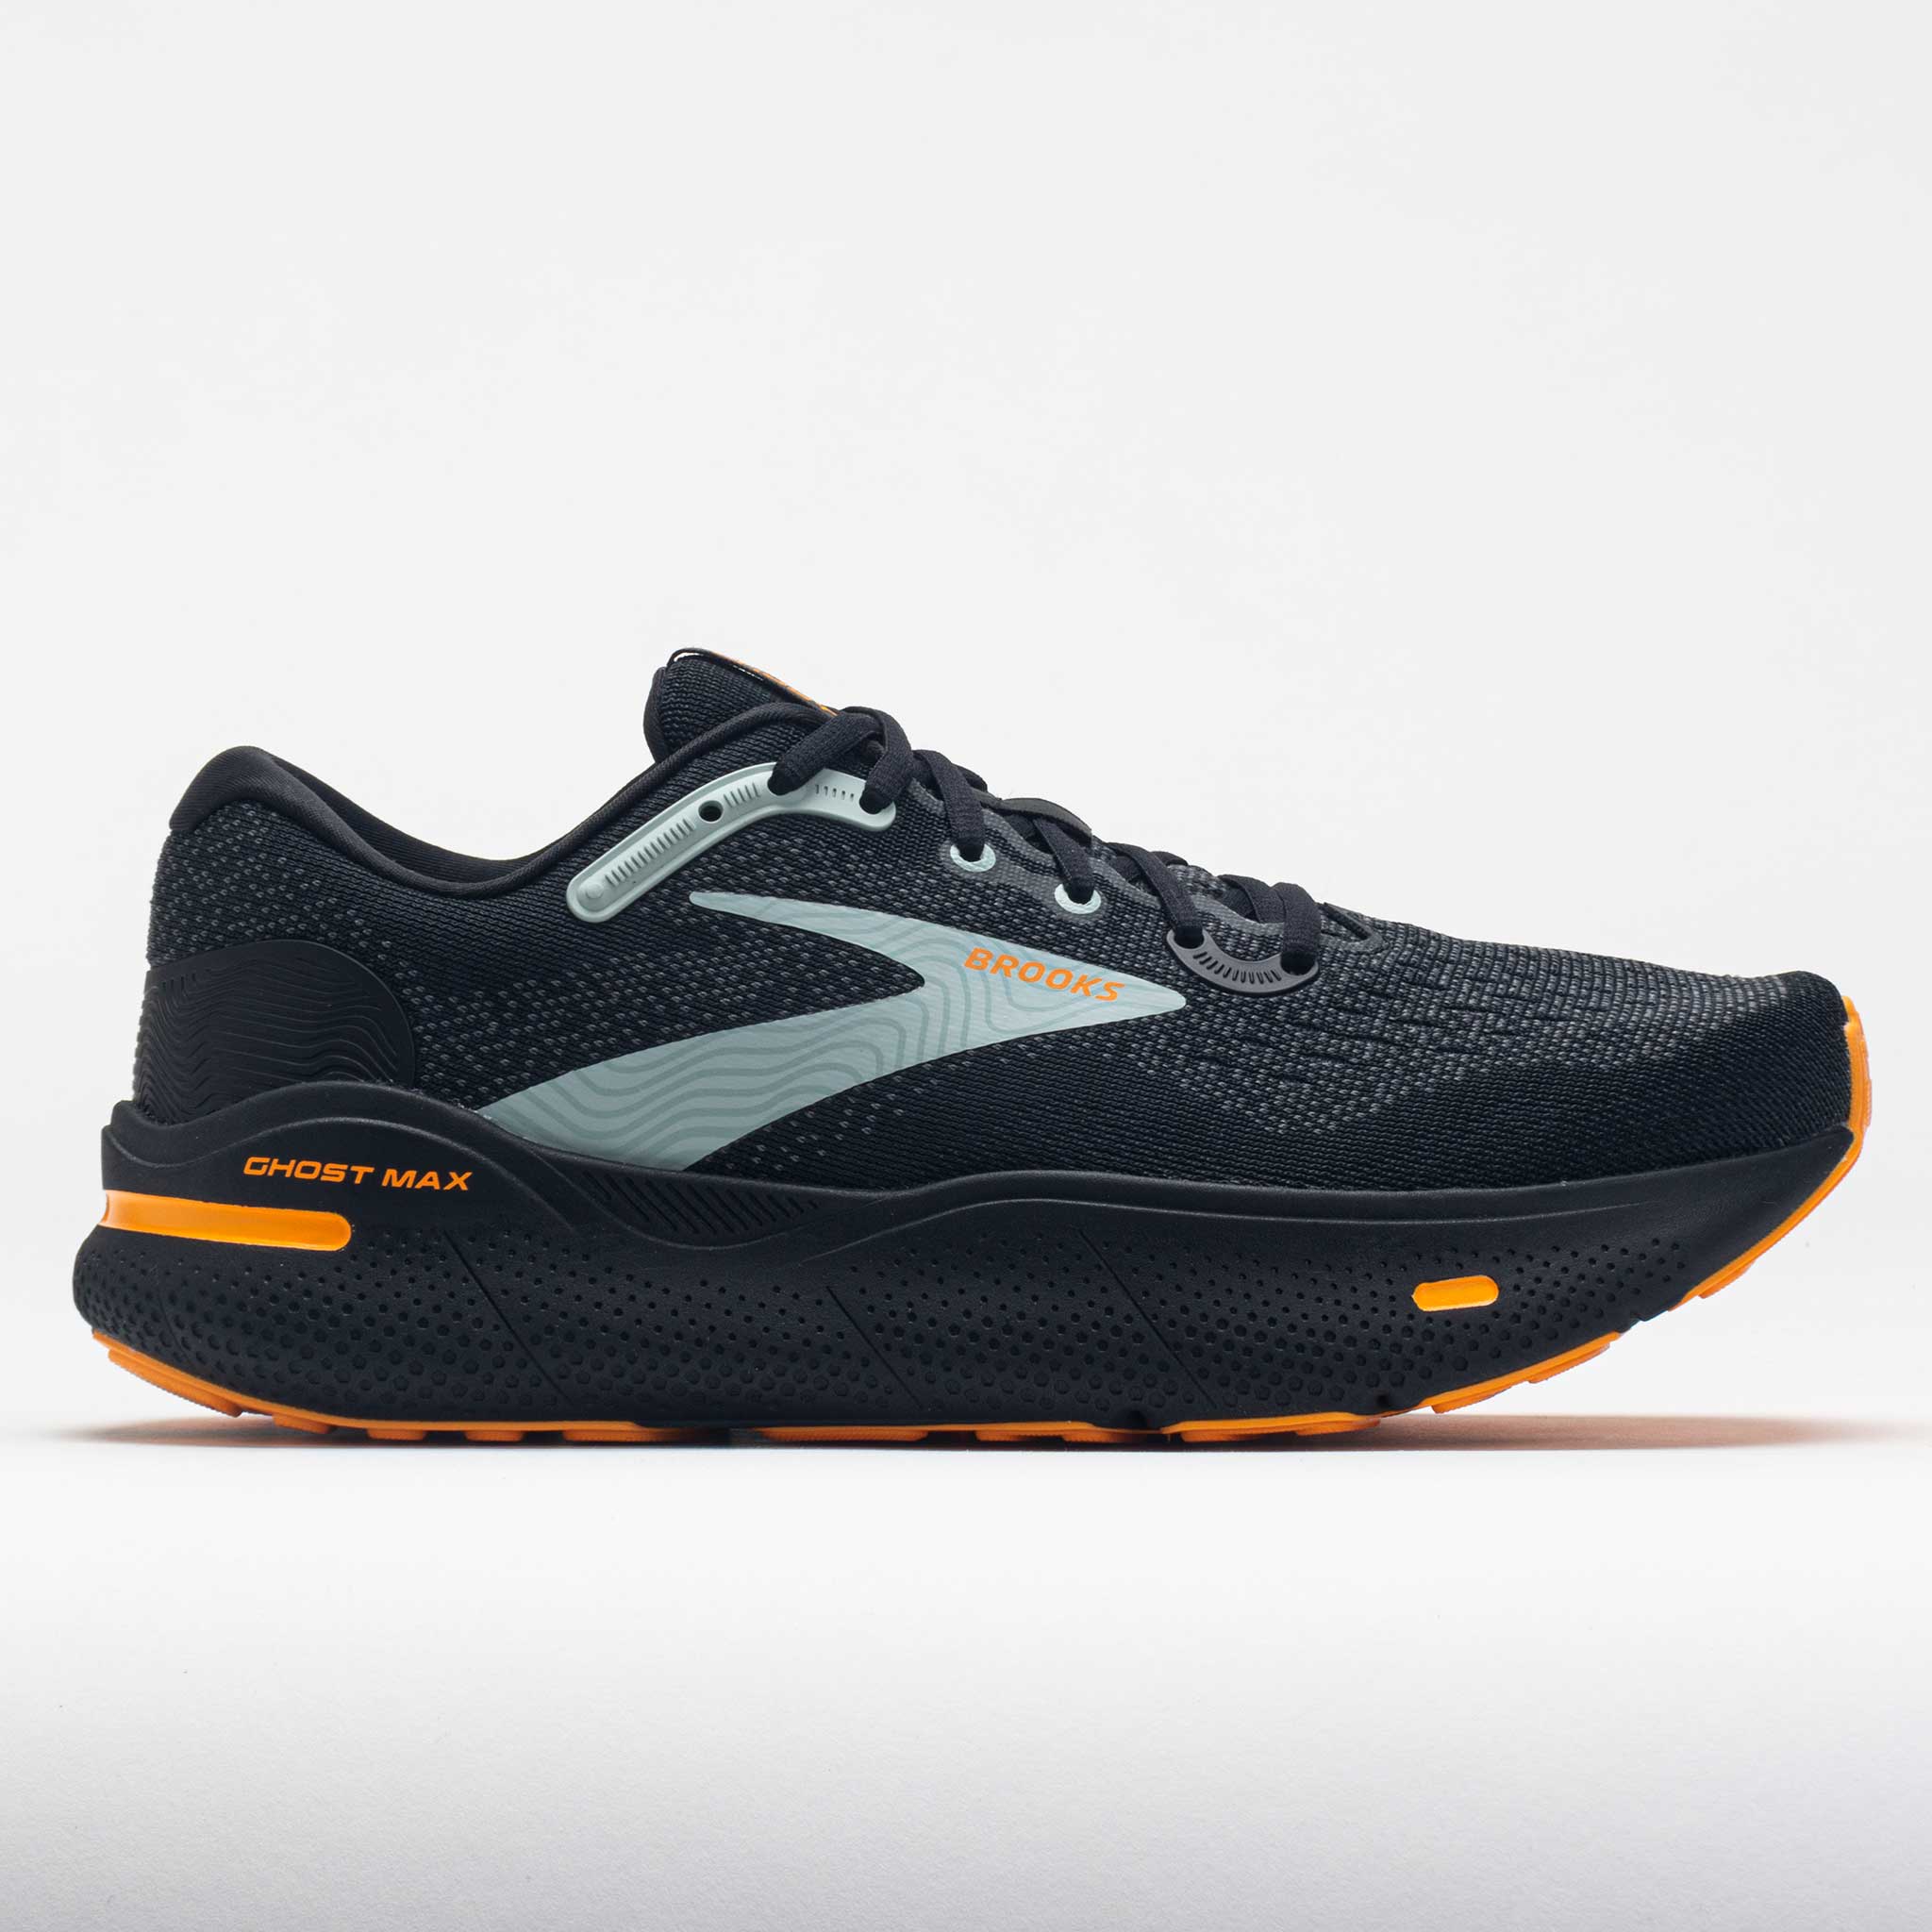 Brooks Ghost Max Men's Running Shoes Black/Orange/Cloud Blue Size 11 Width D - Medium